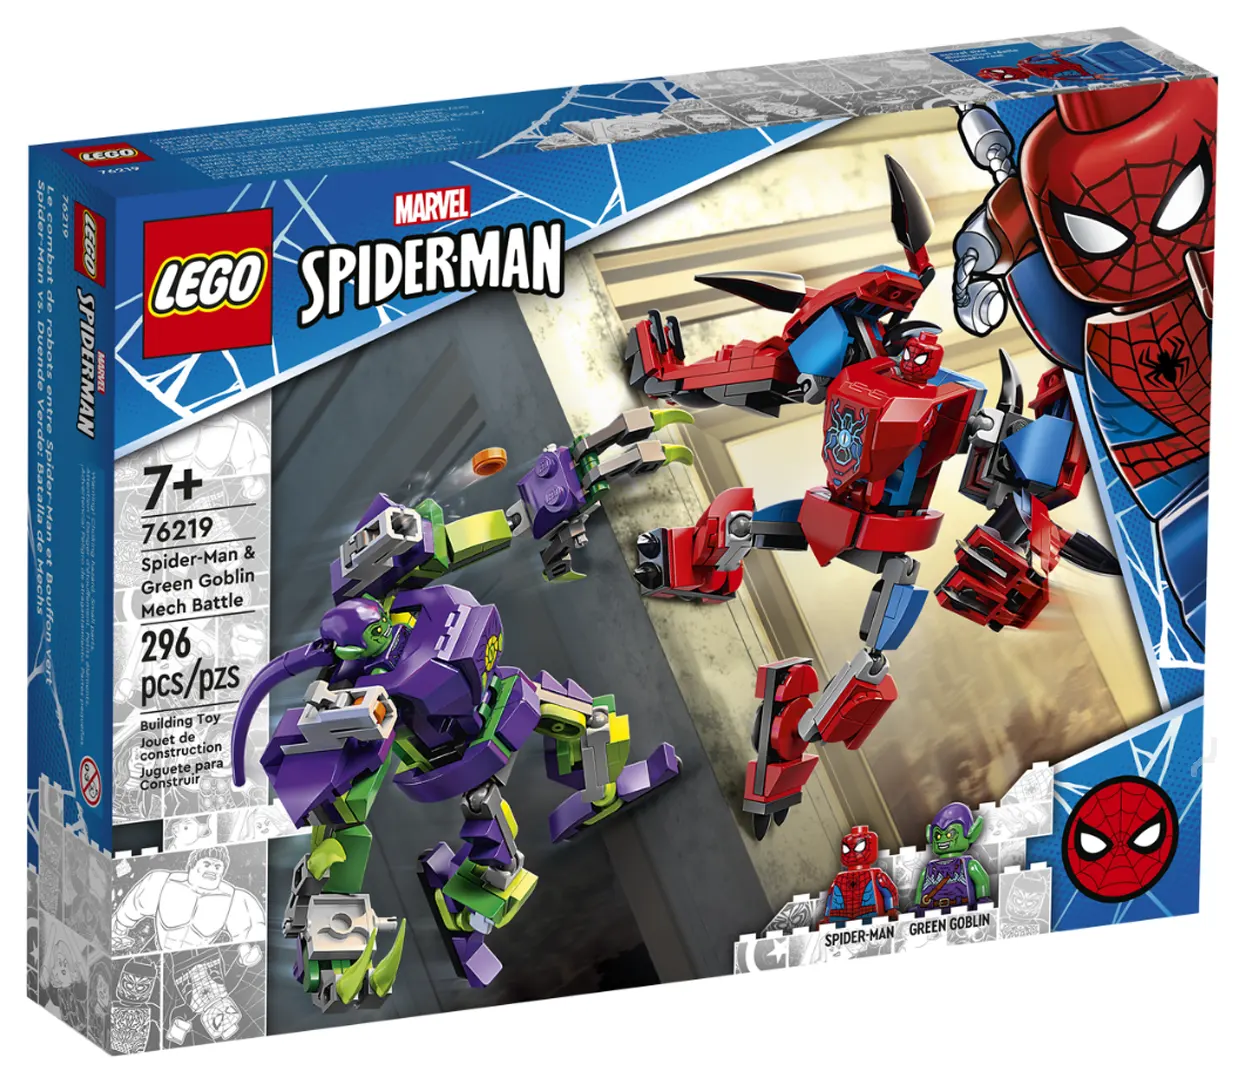 LEGO Marvel Super Heroes Spider-Man & Green Goblin Mech Battle 76219